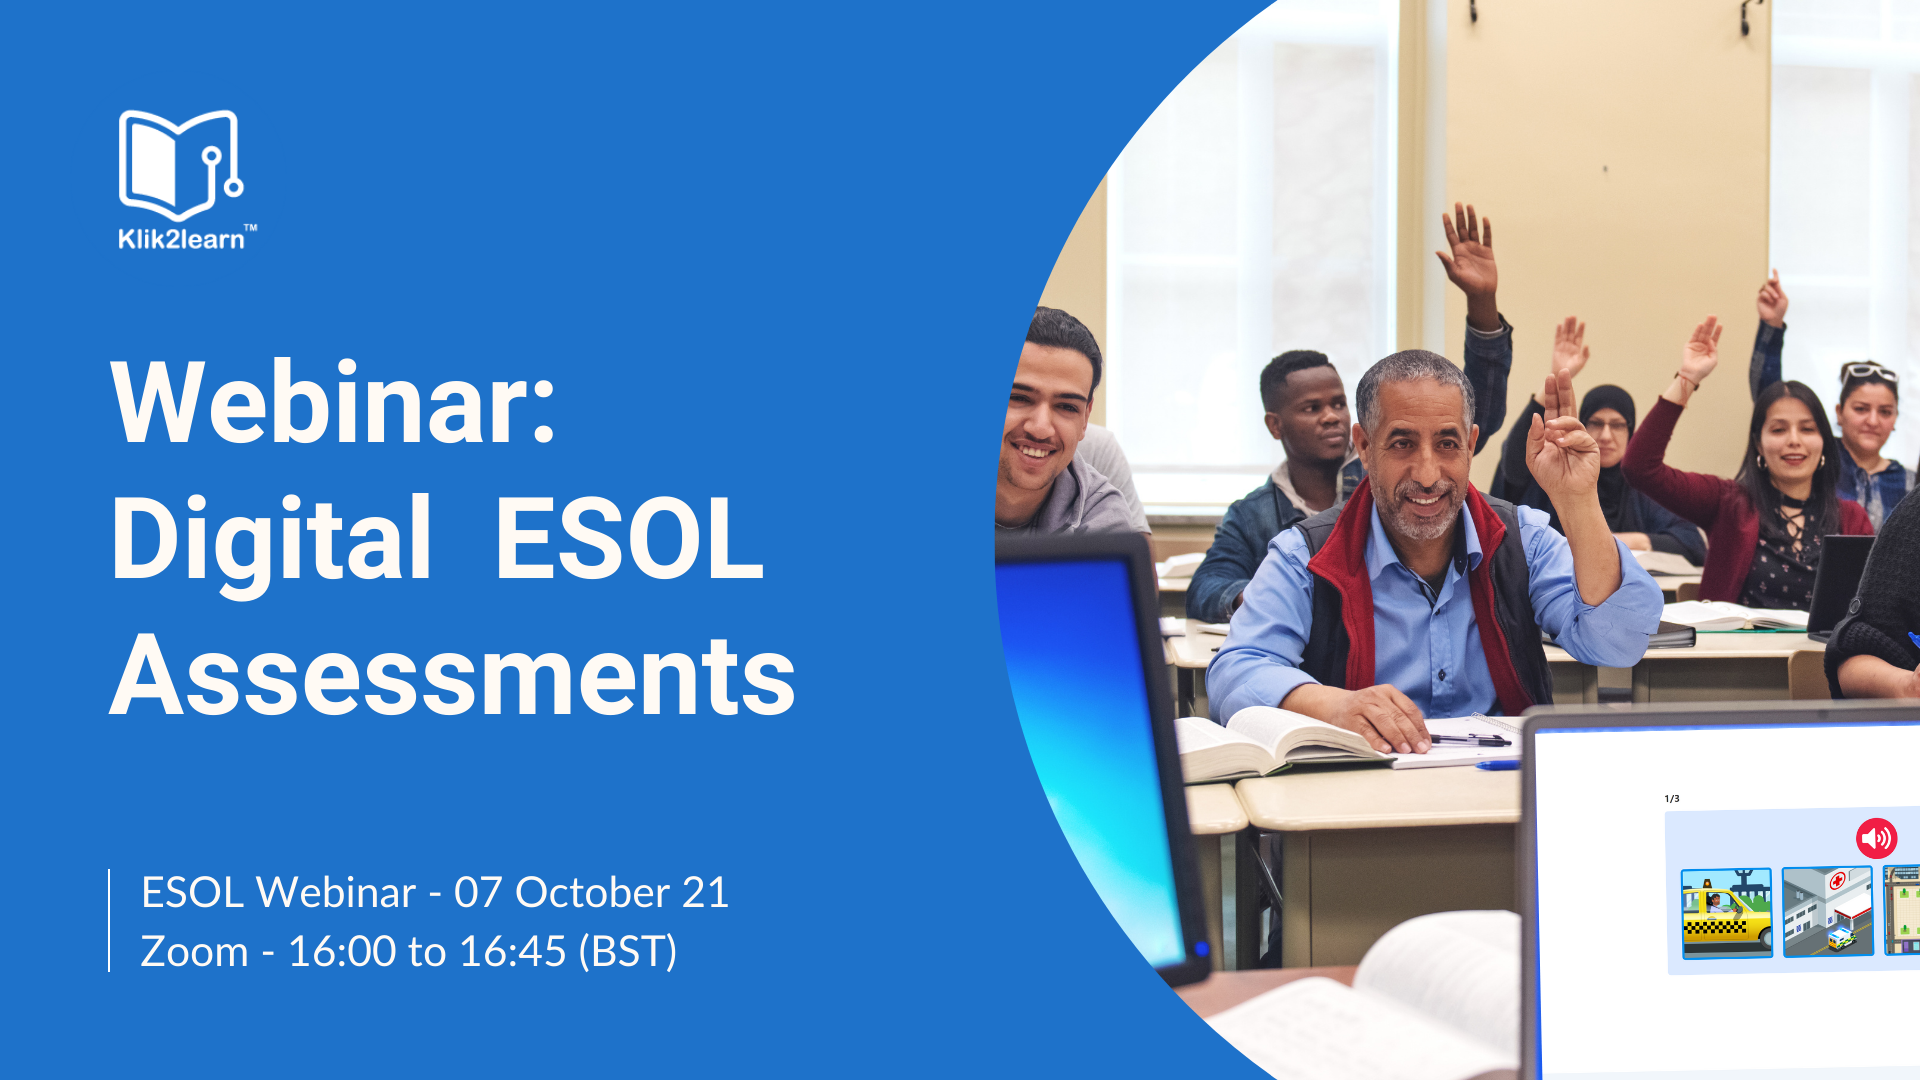 Webinar on Digital ESOL Assessments